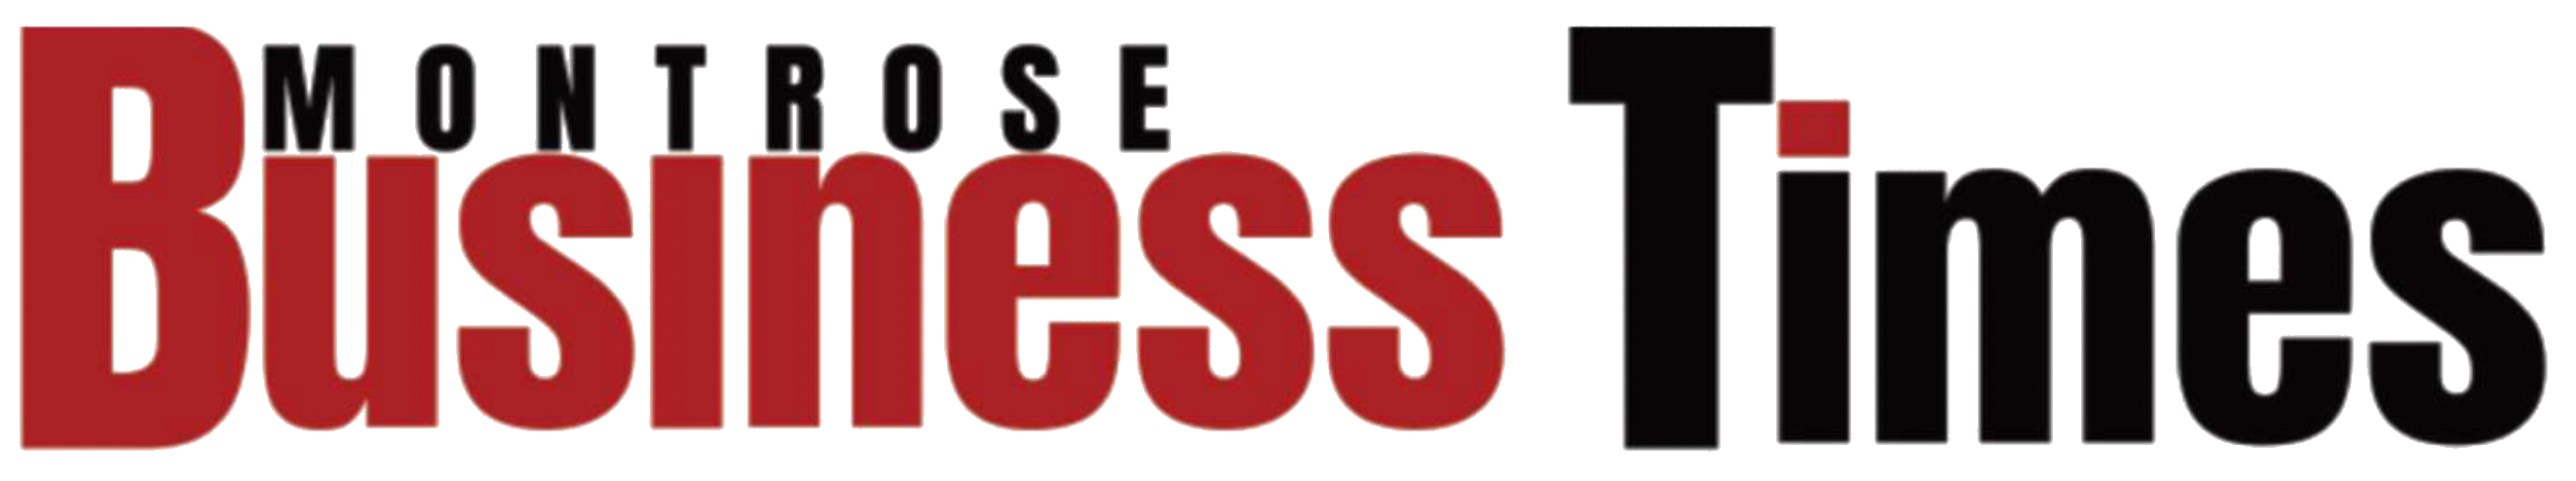 MontroseBusinessTimes-logo